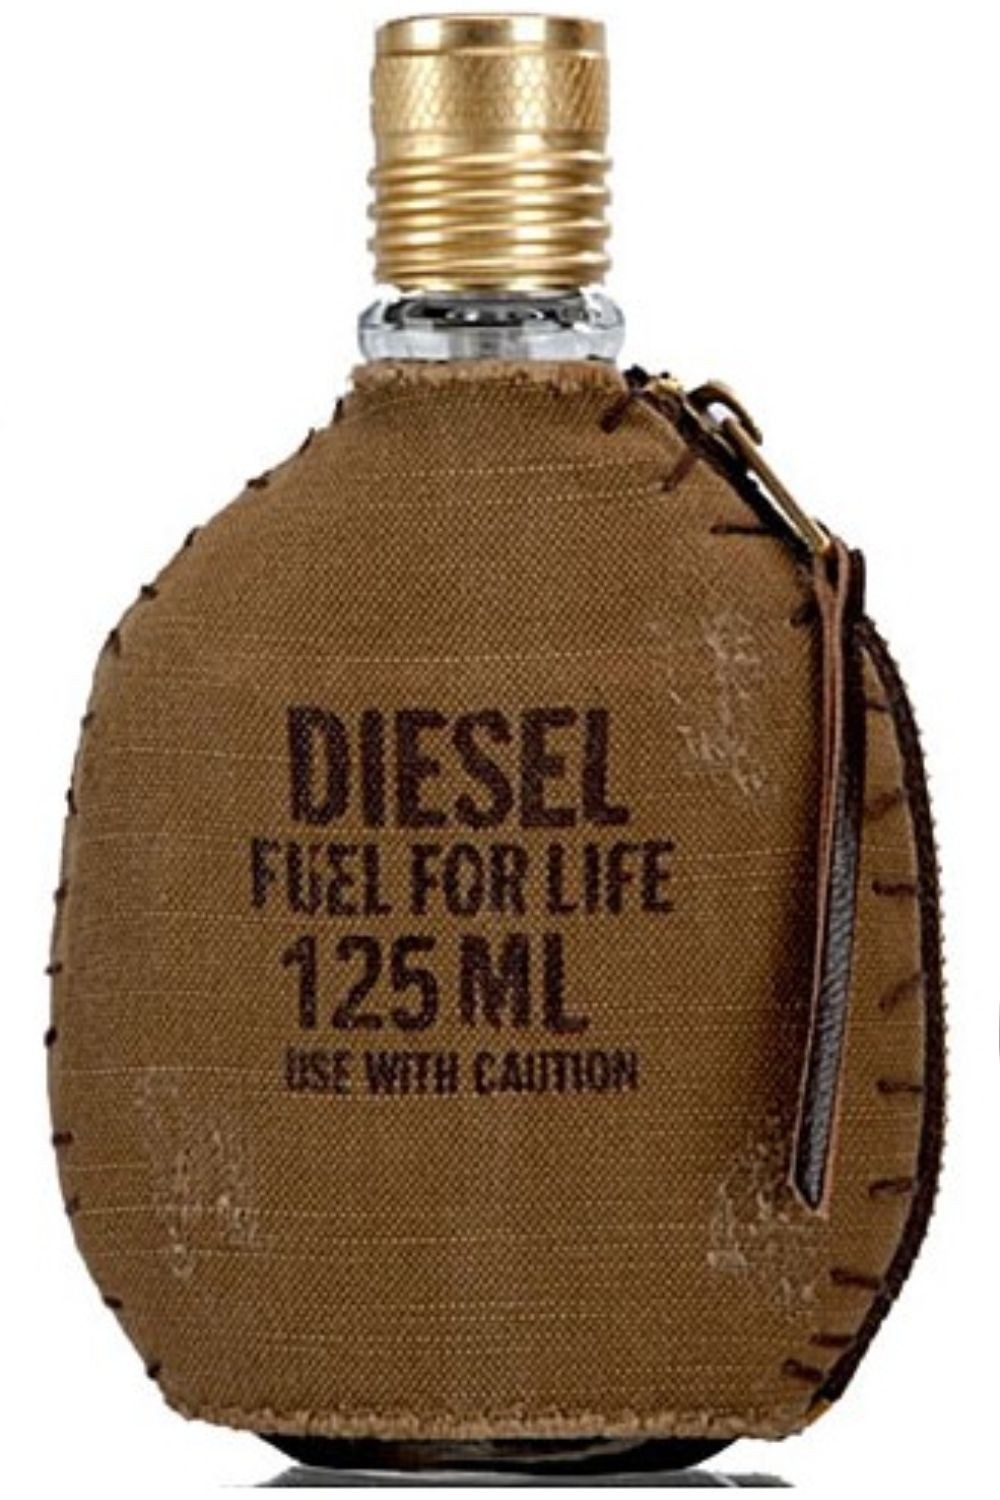 Diesel Fuel For Life 125ml Erkek Tester Parfüm